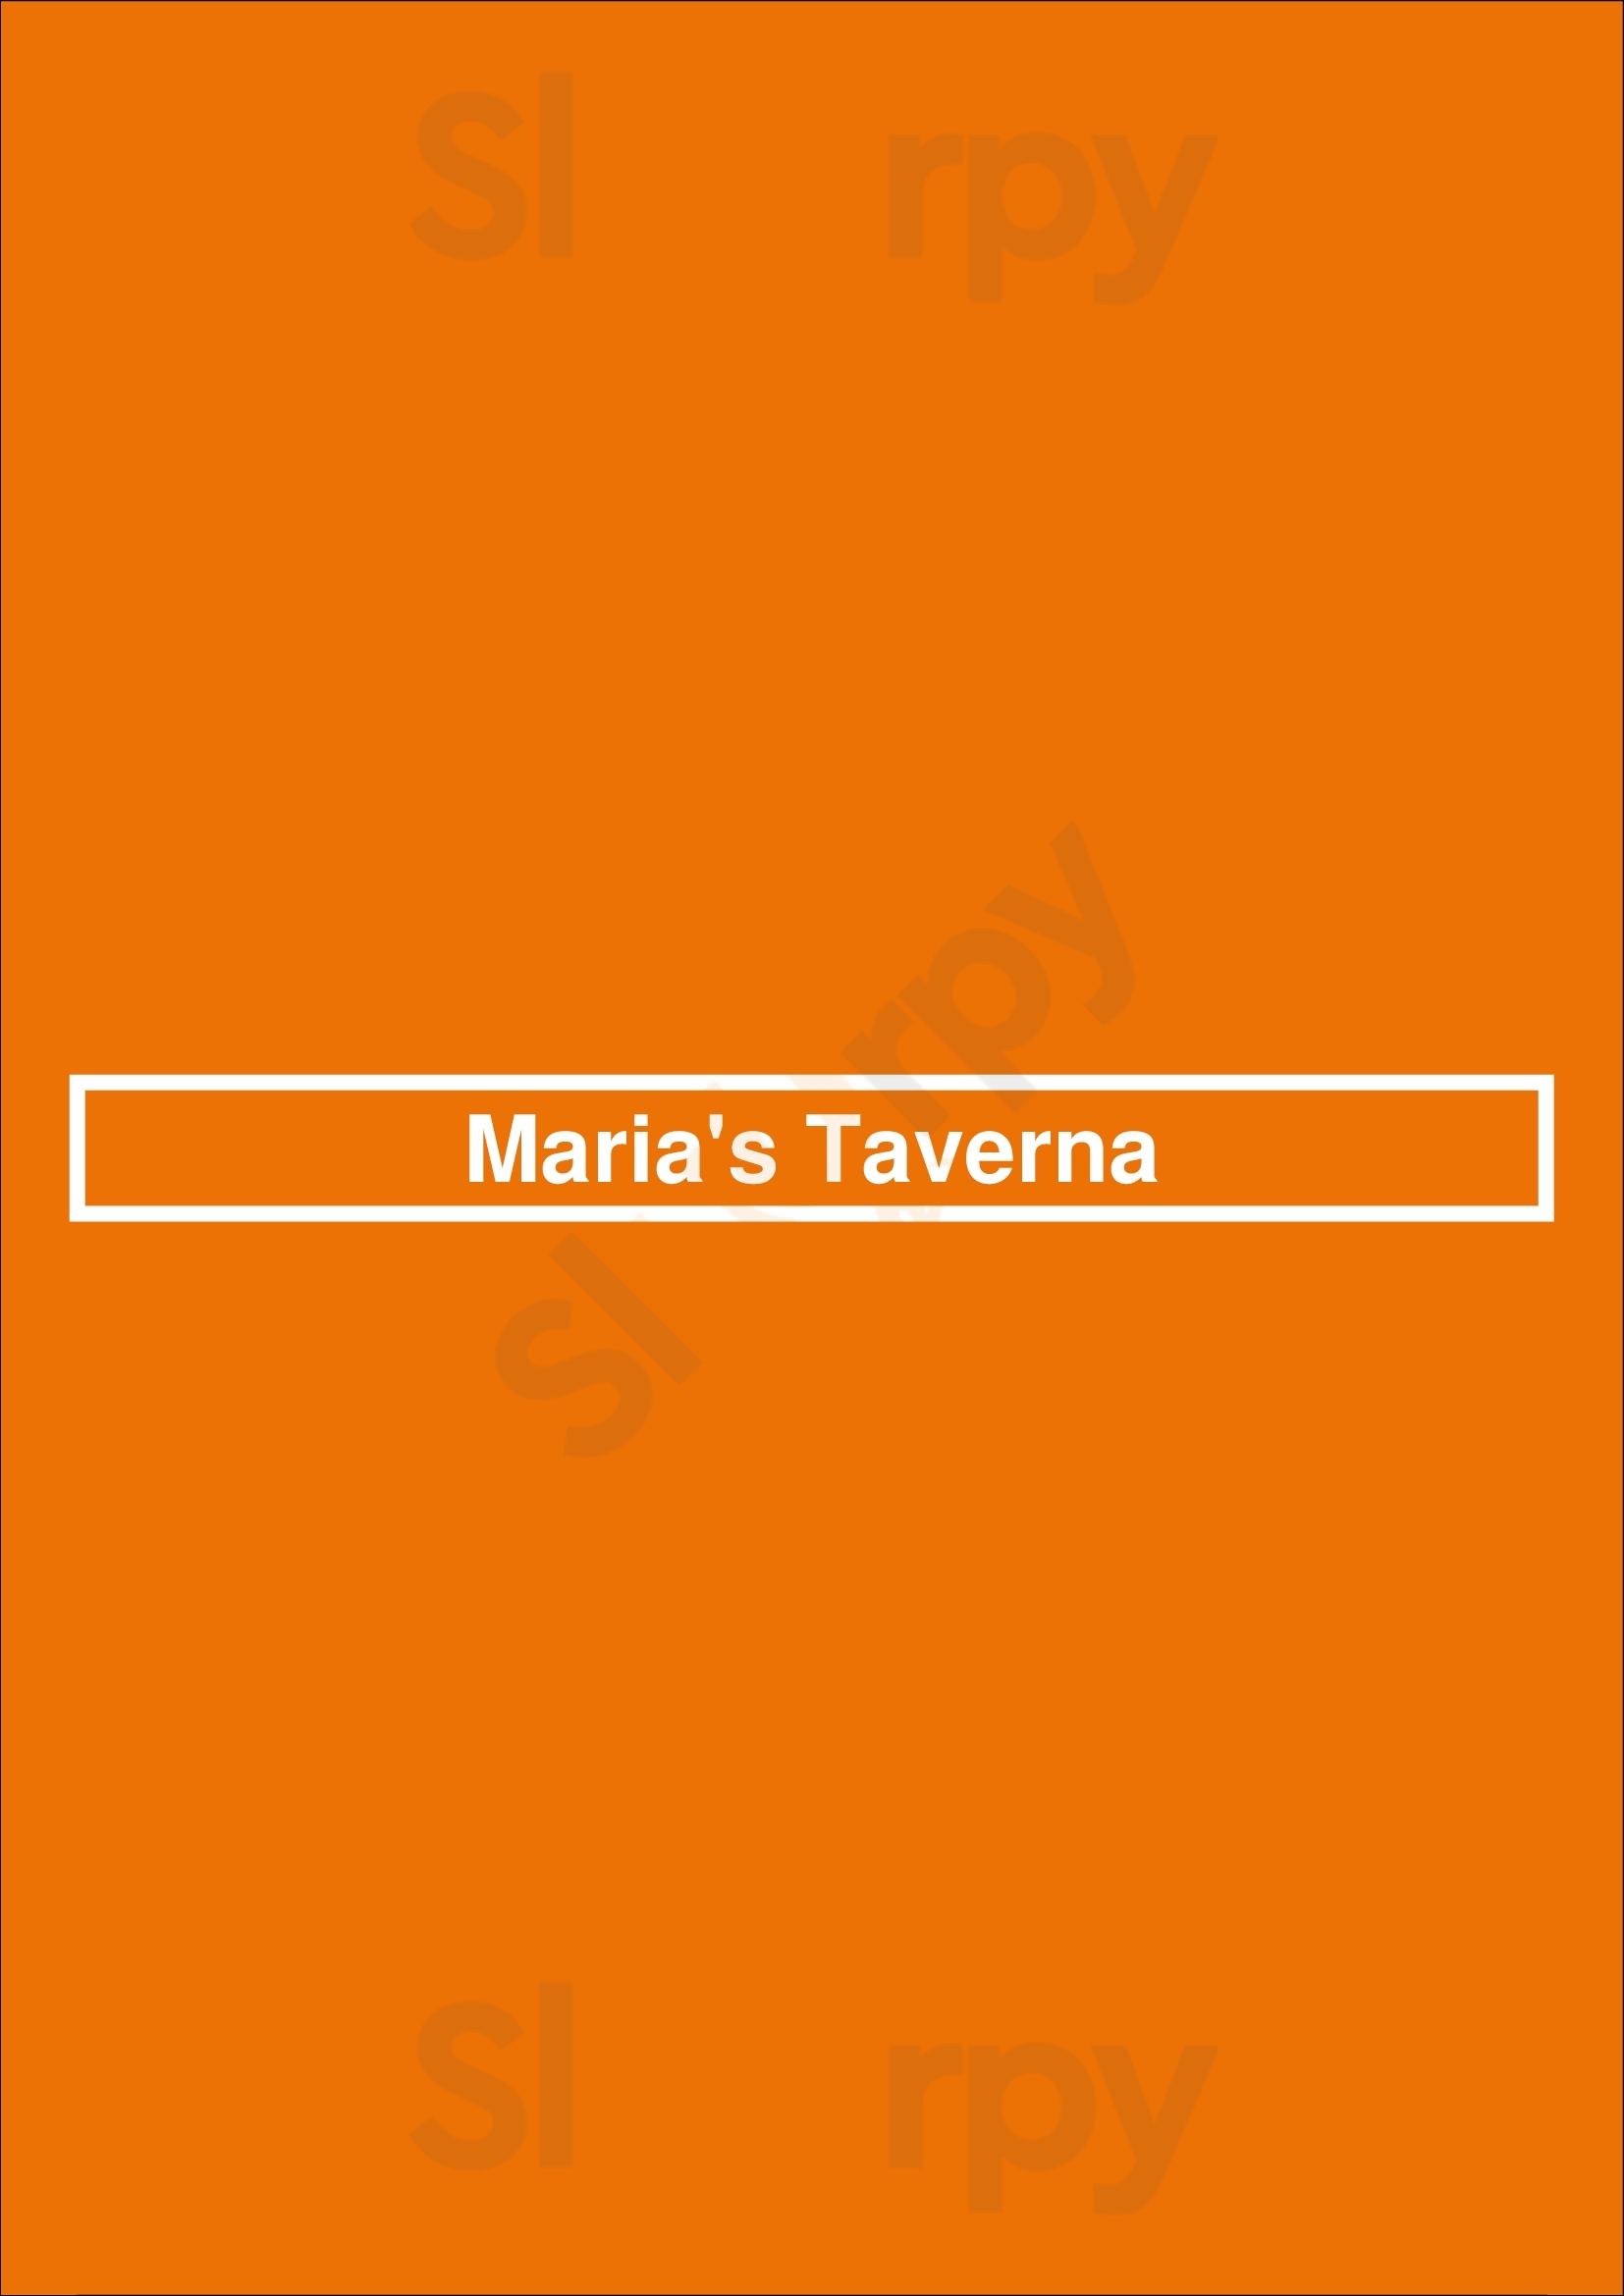 Maria's Taverna Vancouver Menu - 1